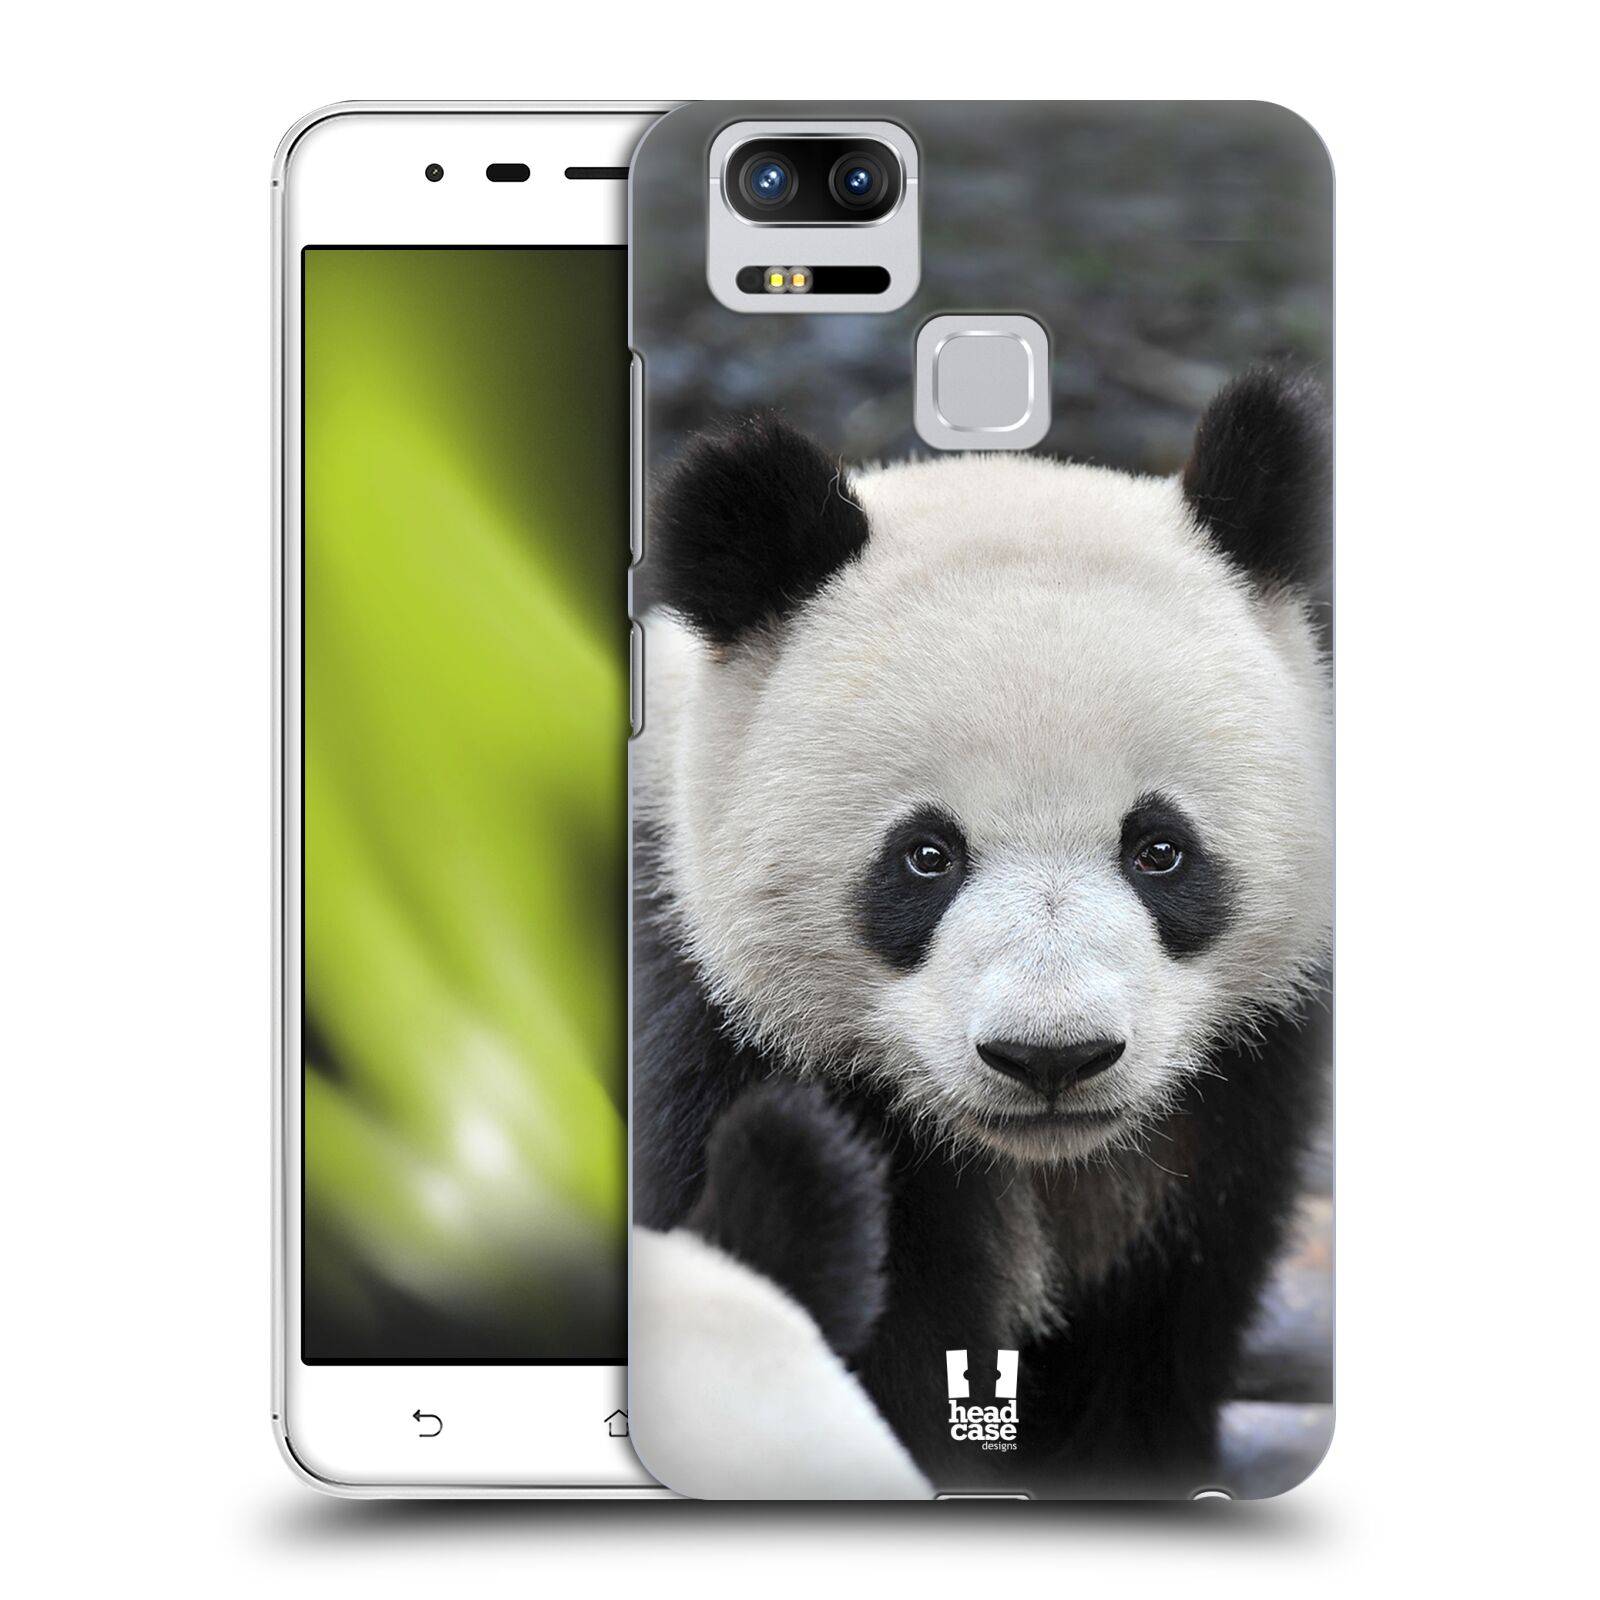 HEAD CASE plastový obal na mobil Asus Zenfone 3 Zoom ZE553KL vzor Divočina, Divoký život a zvířata foto MEDVĚD PANDA